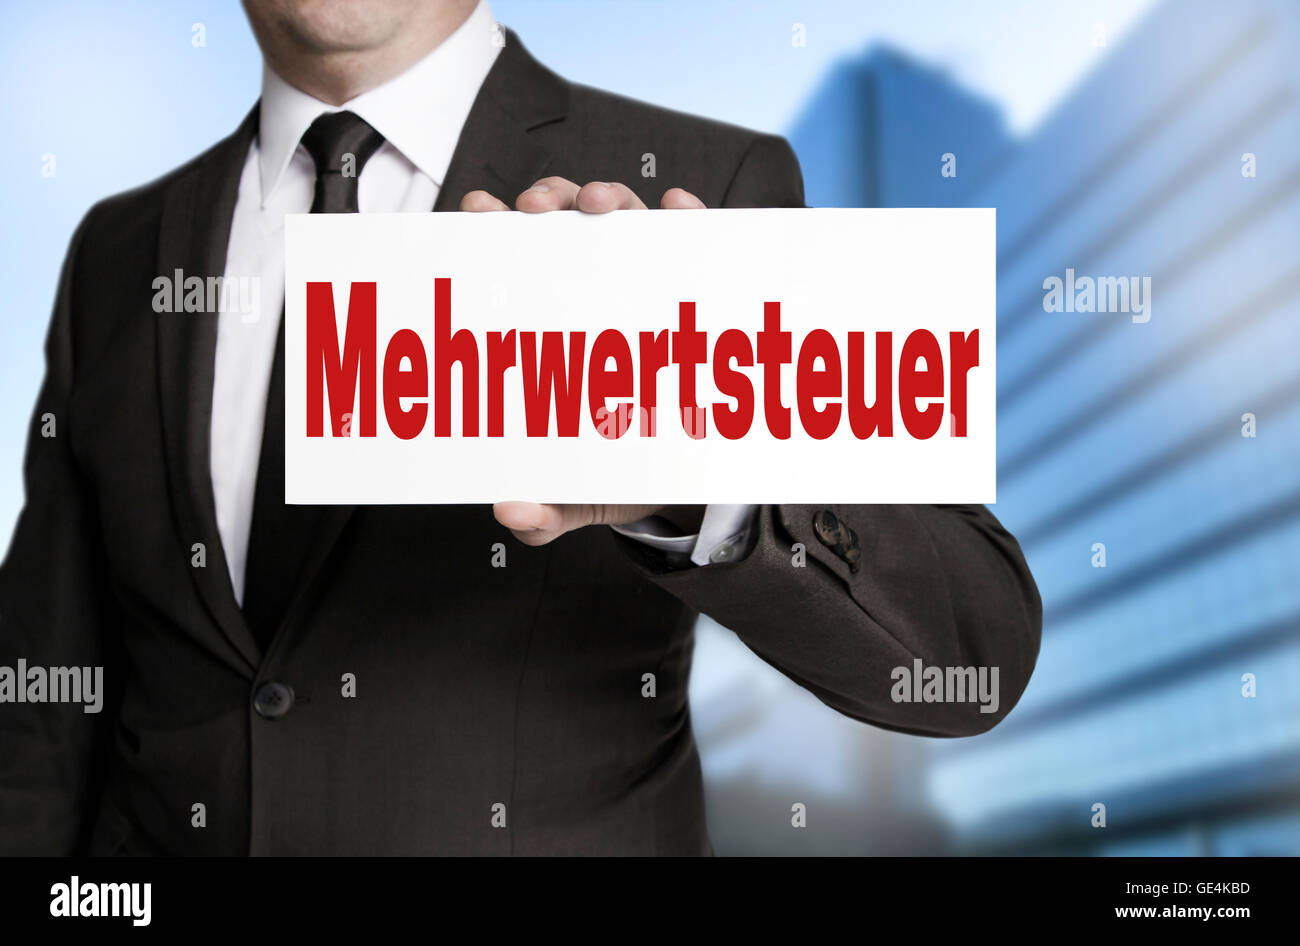 Mehrwertsteuer (in german VAT) sign is held by businessman. Stock Photo